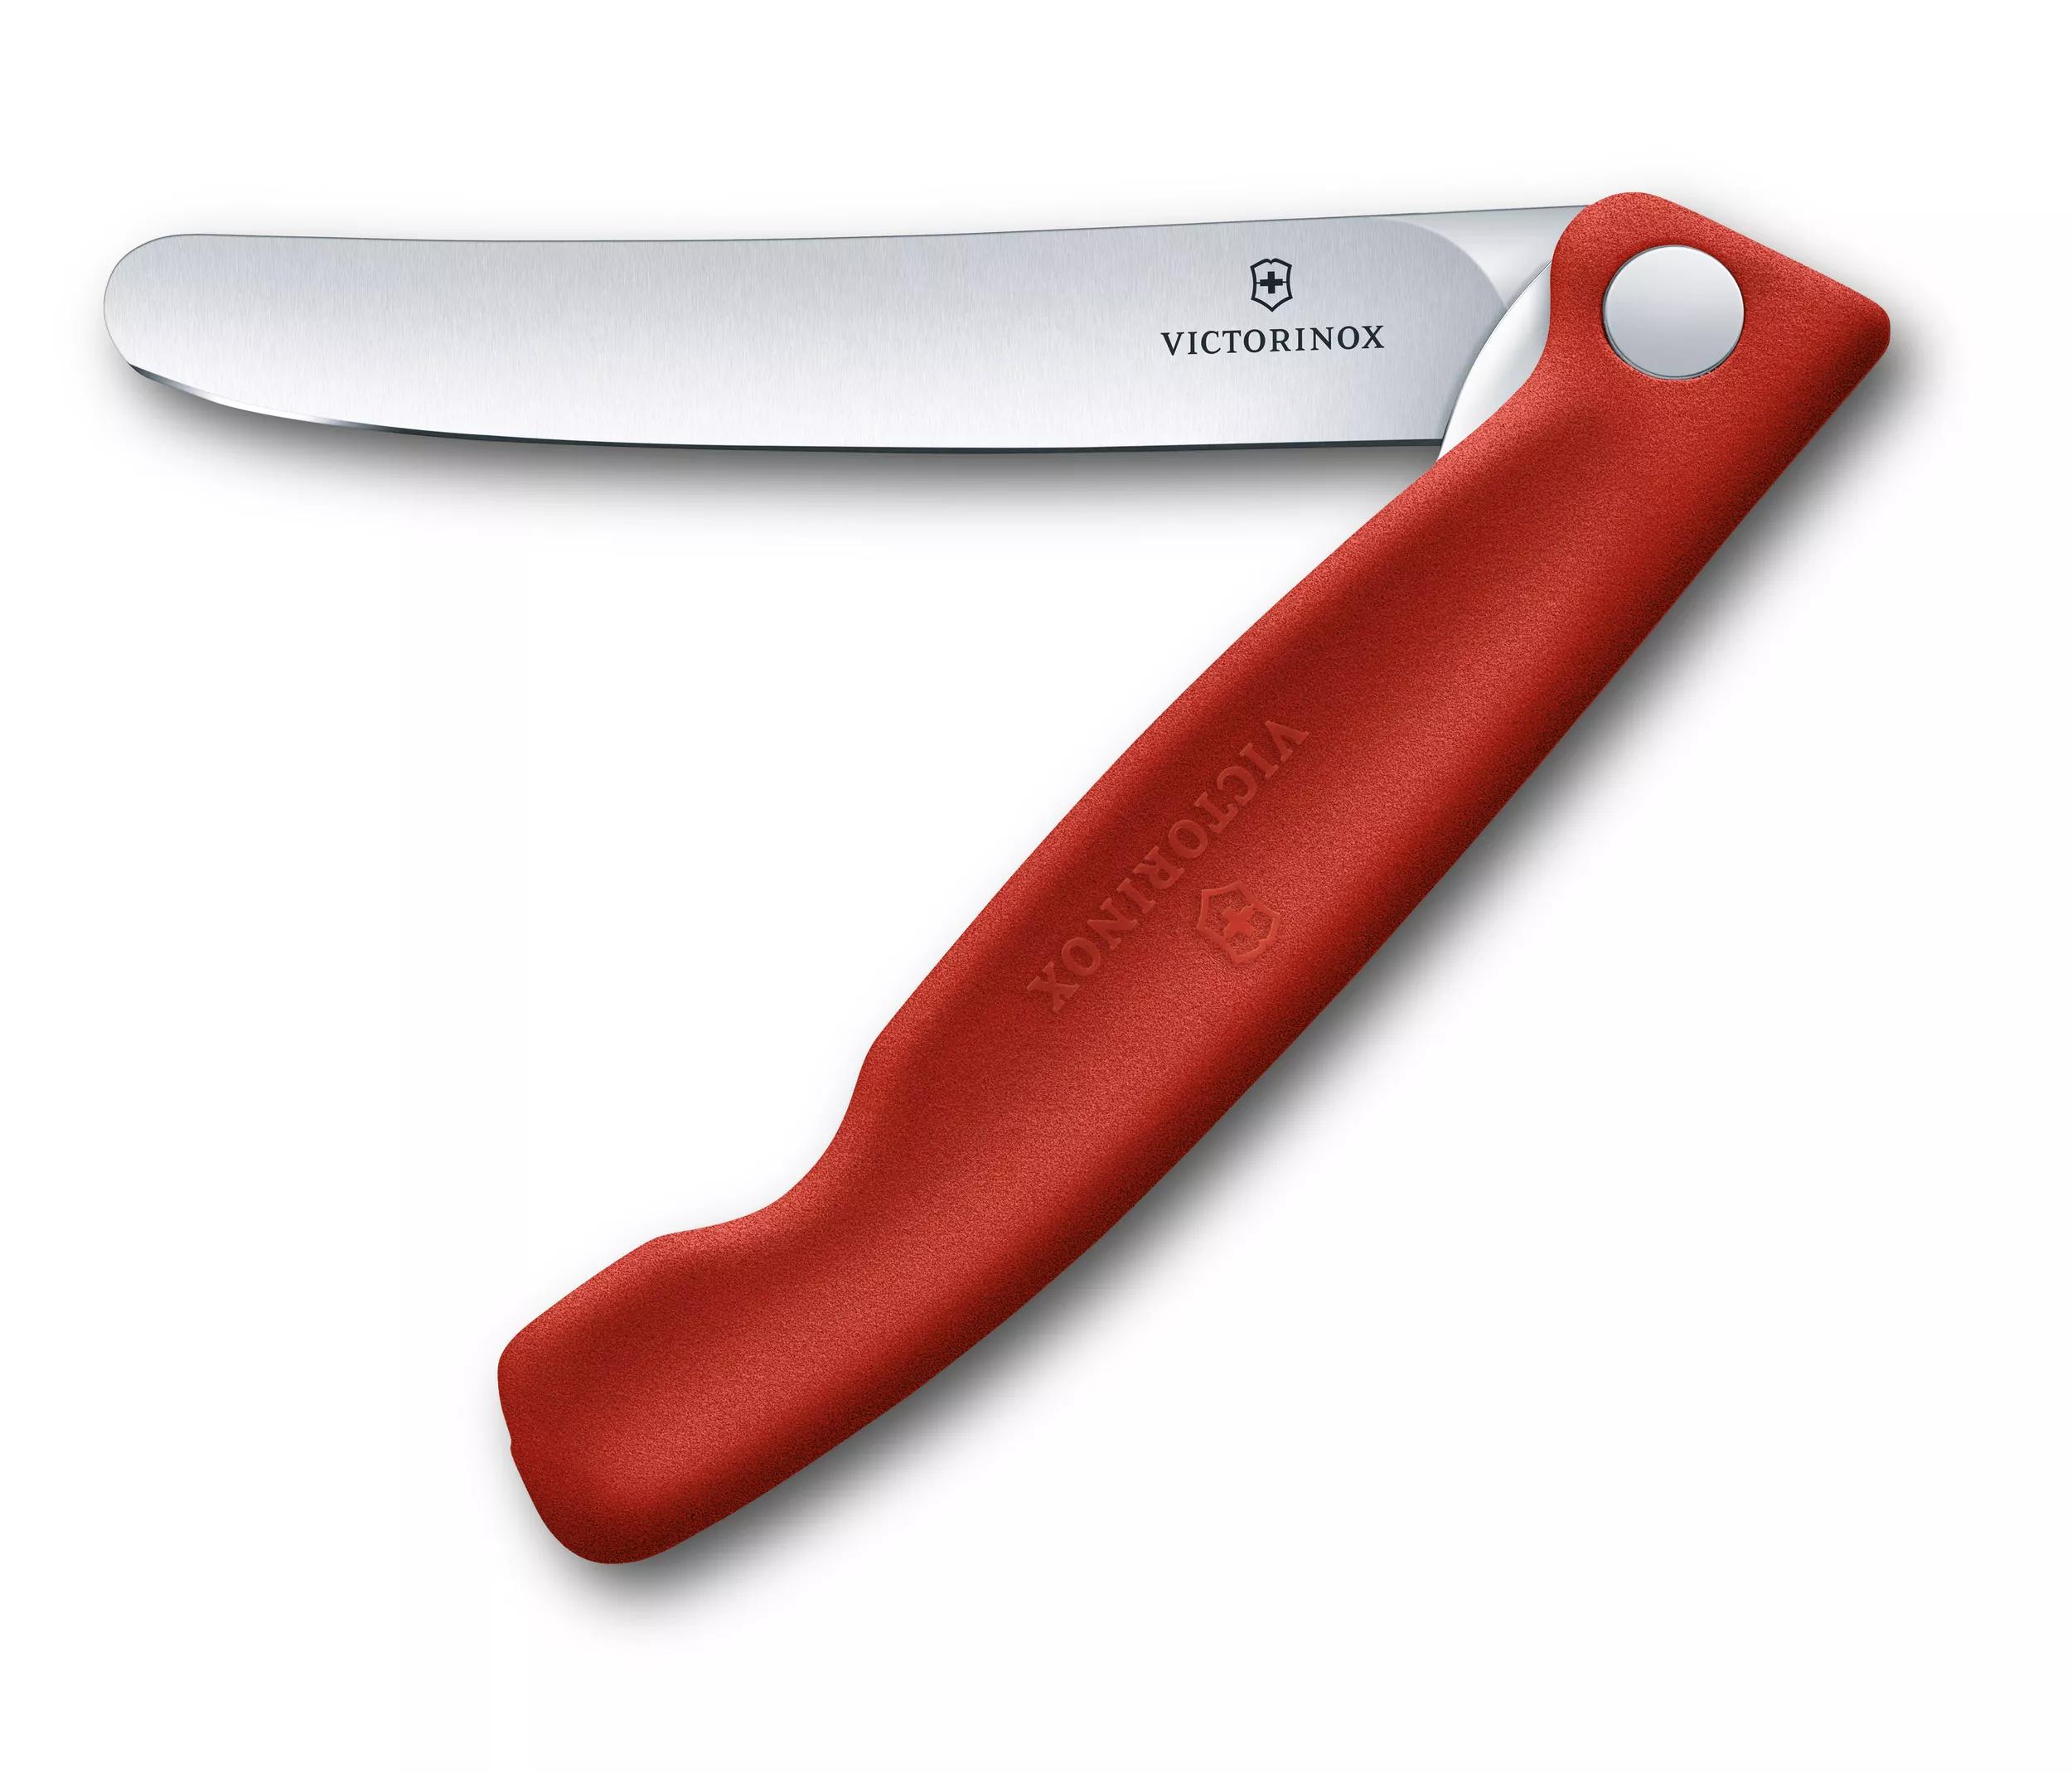 Cuchillo de Cocina Victorinox Swiss Classic Legumbres 10 cm – FERREKUPER